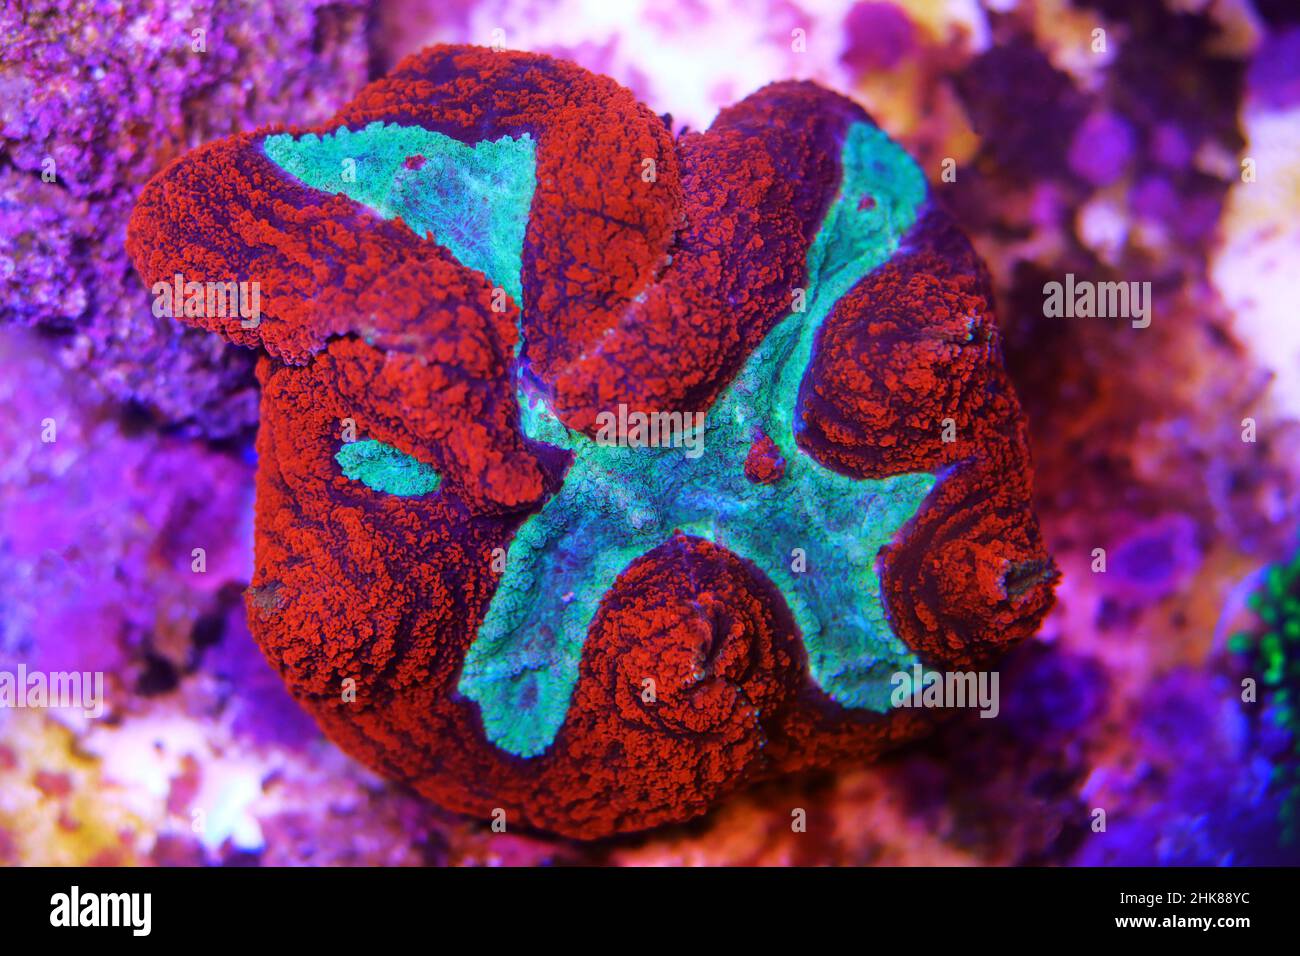 Symphyllia sp. -  Large polyps stony coral in reef aquarium tank Stock Photo